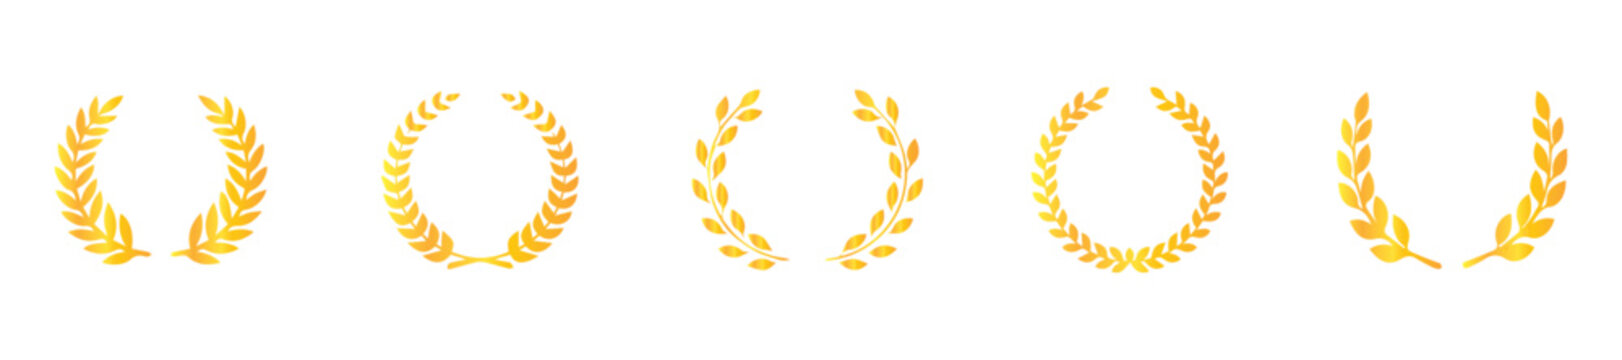 Set black silhouette circular laurel foliate, wheat and oak wreaths depicting an award, achievement, heraldry, nobility on white background. Emblem floral greek branch flat style. Vector Illustration.